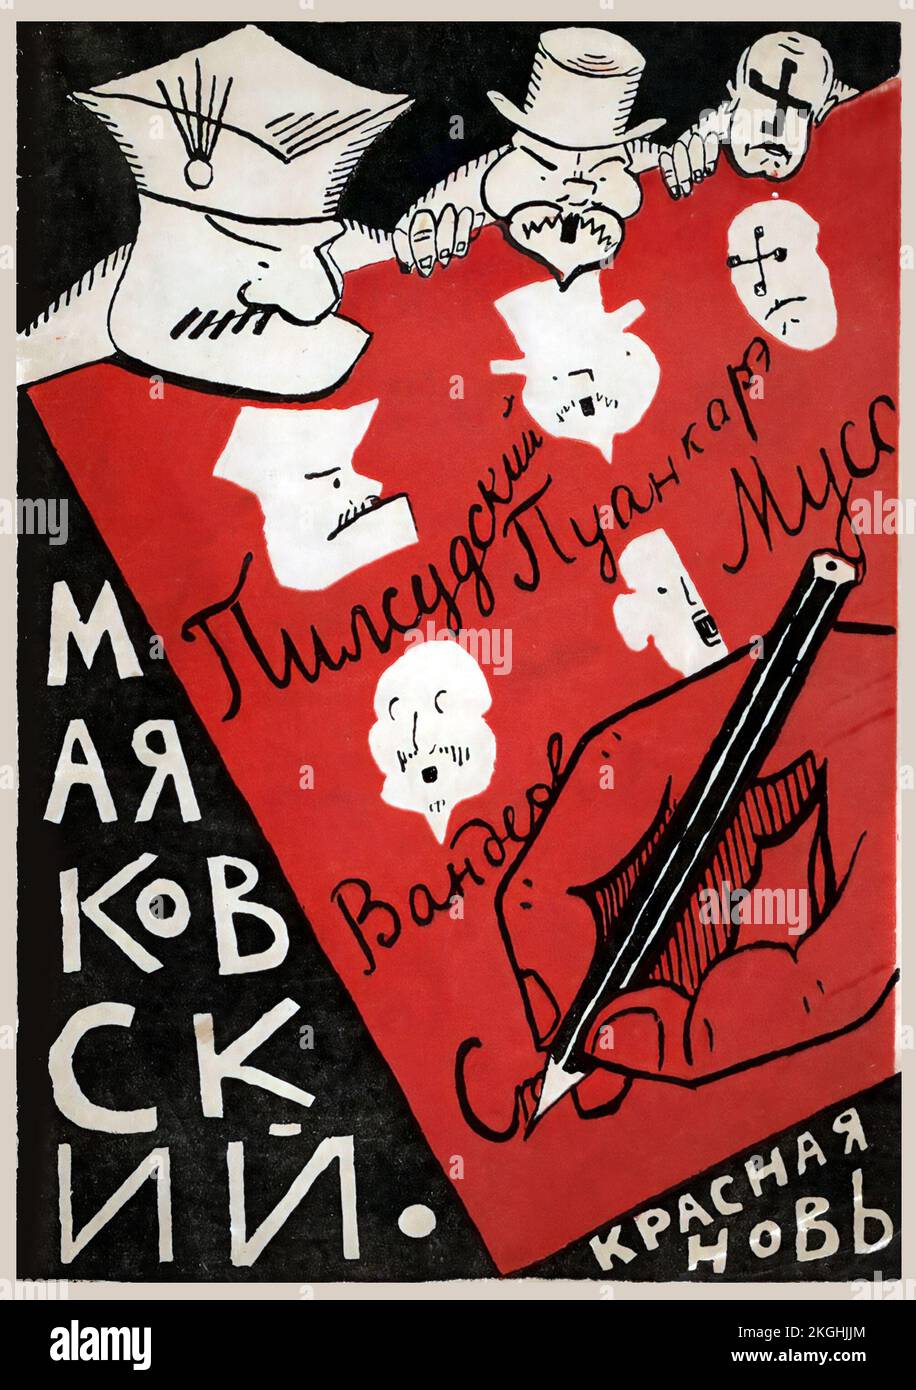 Vladimir Mayakovsky - Maiakovskaia galereia. Te kogo ia nikogda ne videl (Mayakovsky Gallery Those I Have Never Seen) 1923 Stock Photo